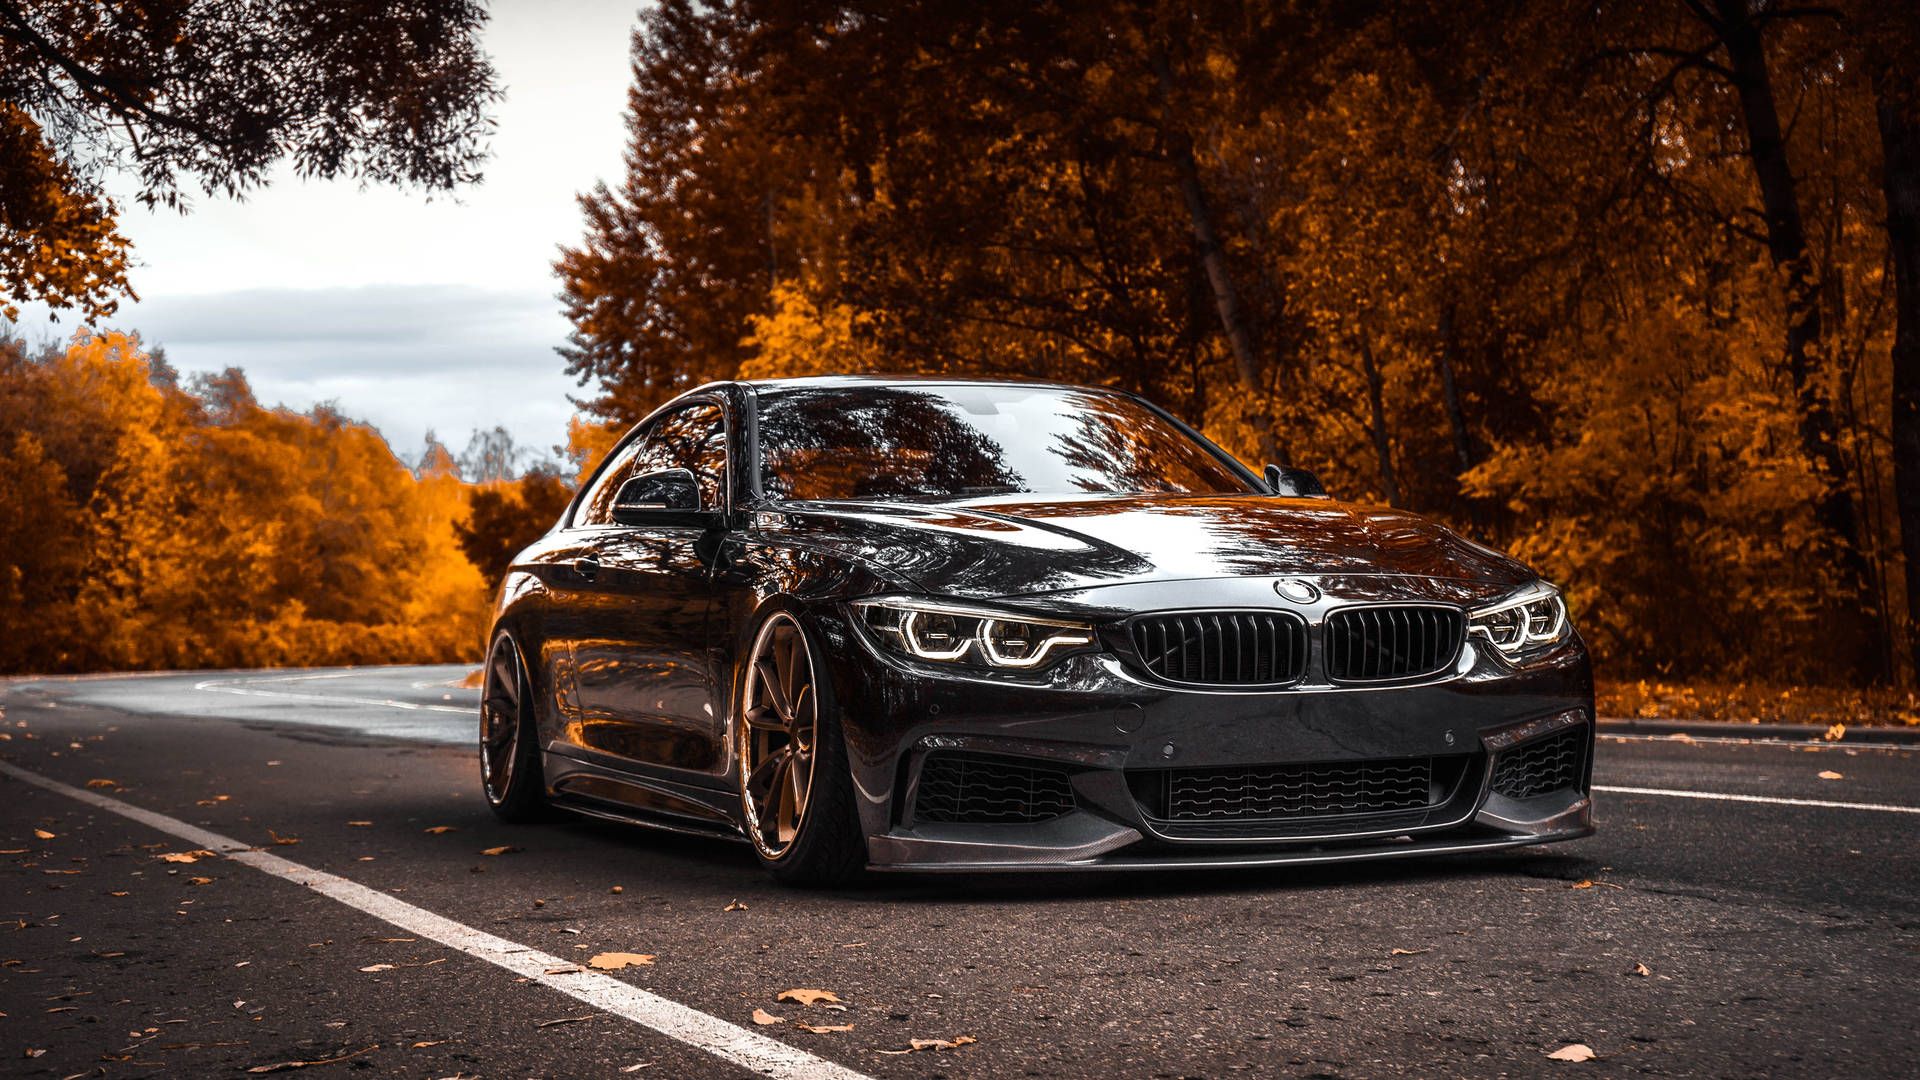 Black BMW 4 series on the road - BMW